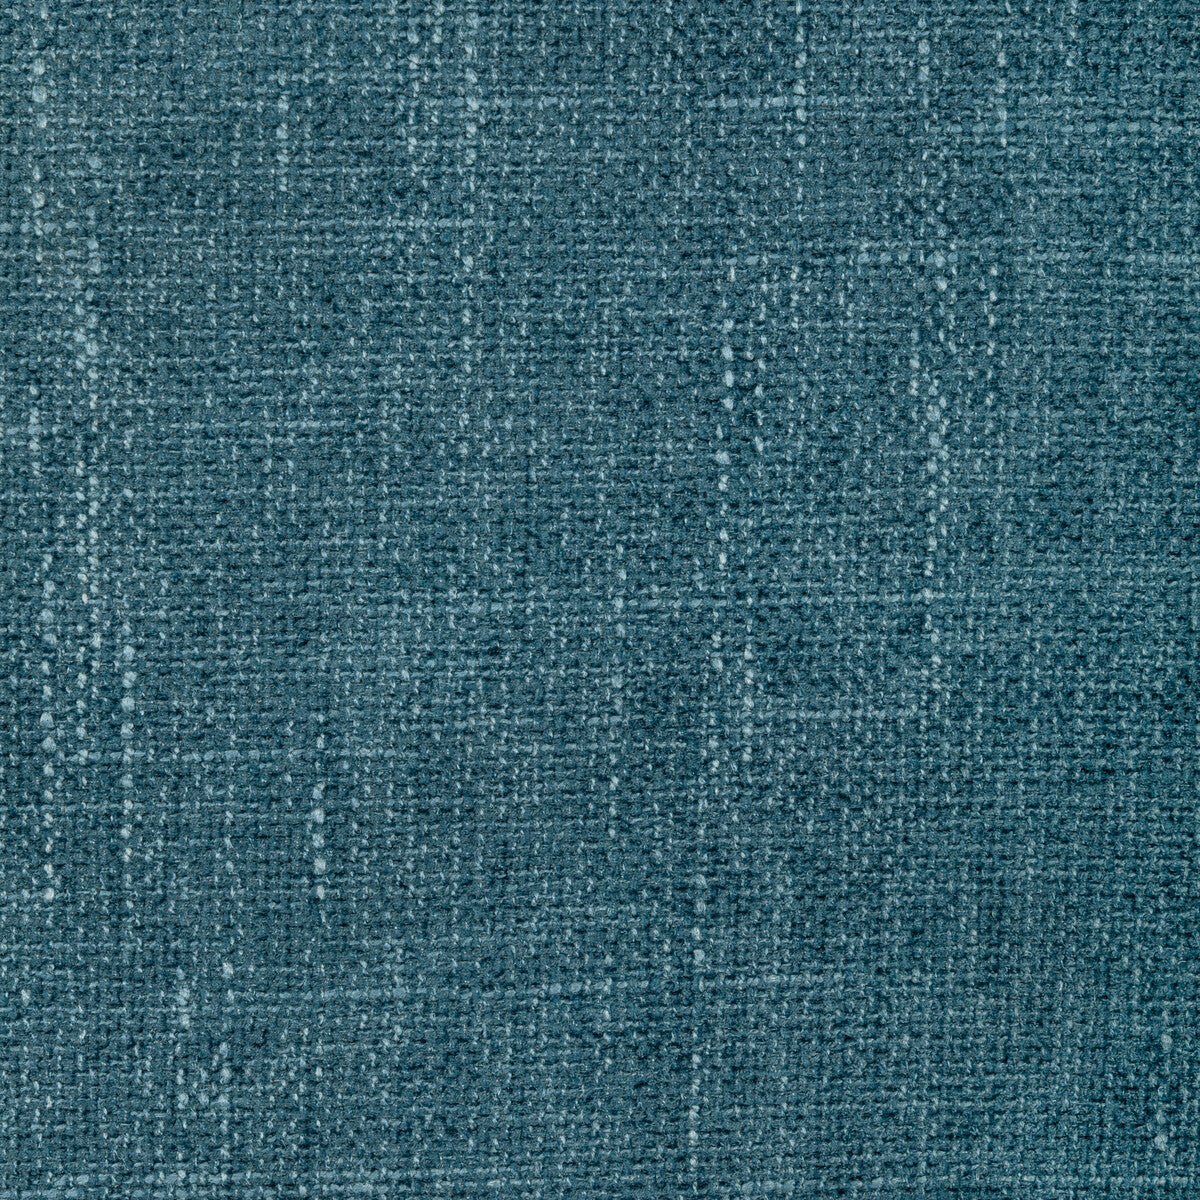 Kravet Smart fabric in 36579-5 color - pattern 36579.5.0 - by Kravet Smart in the Performance Kravetarmor collection